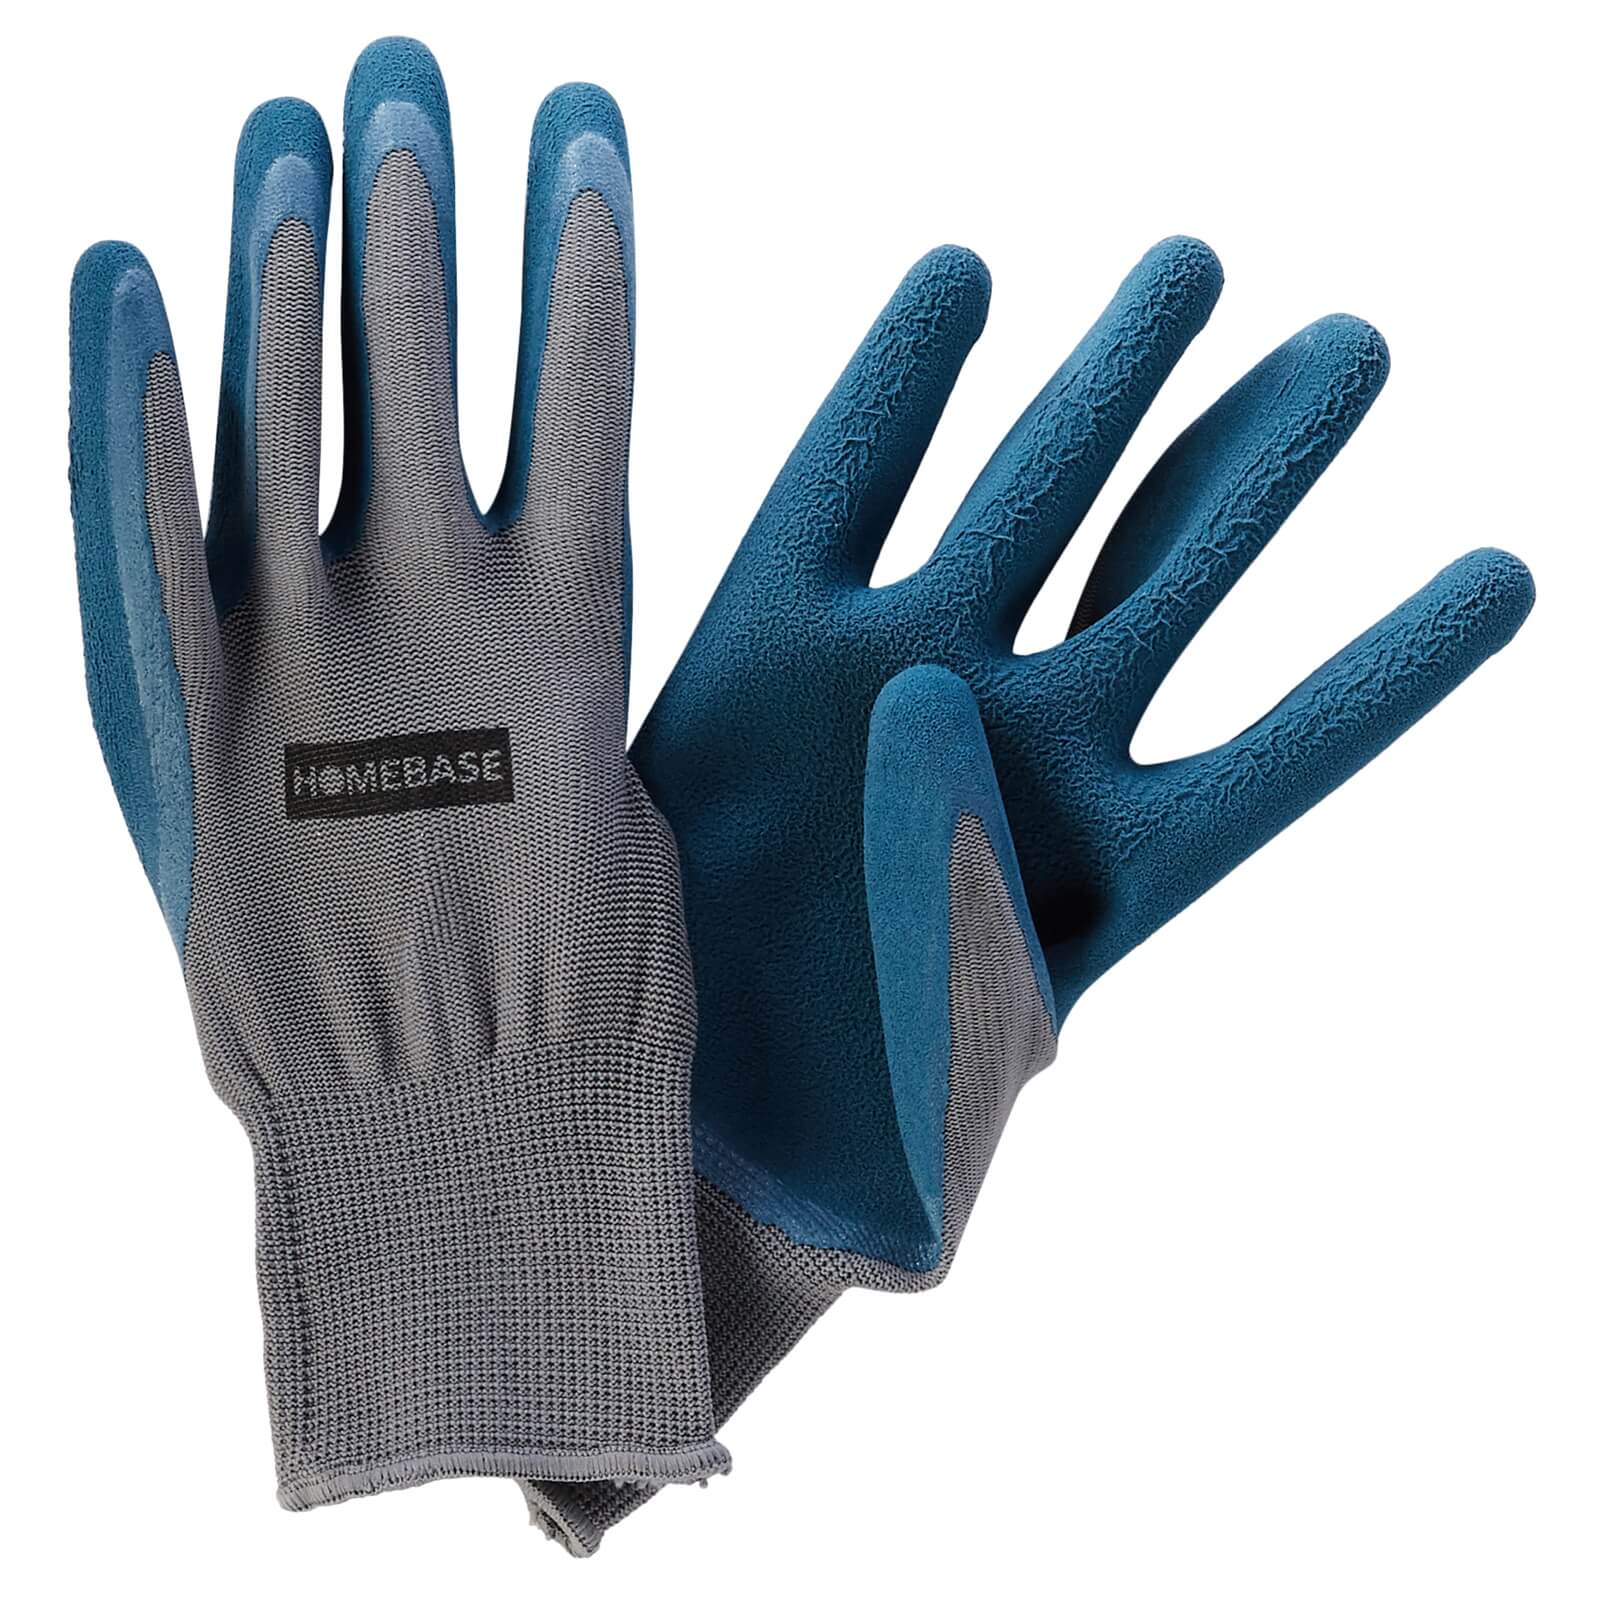 Photo of Homebase Soft Grip Gardening Gloves - Large